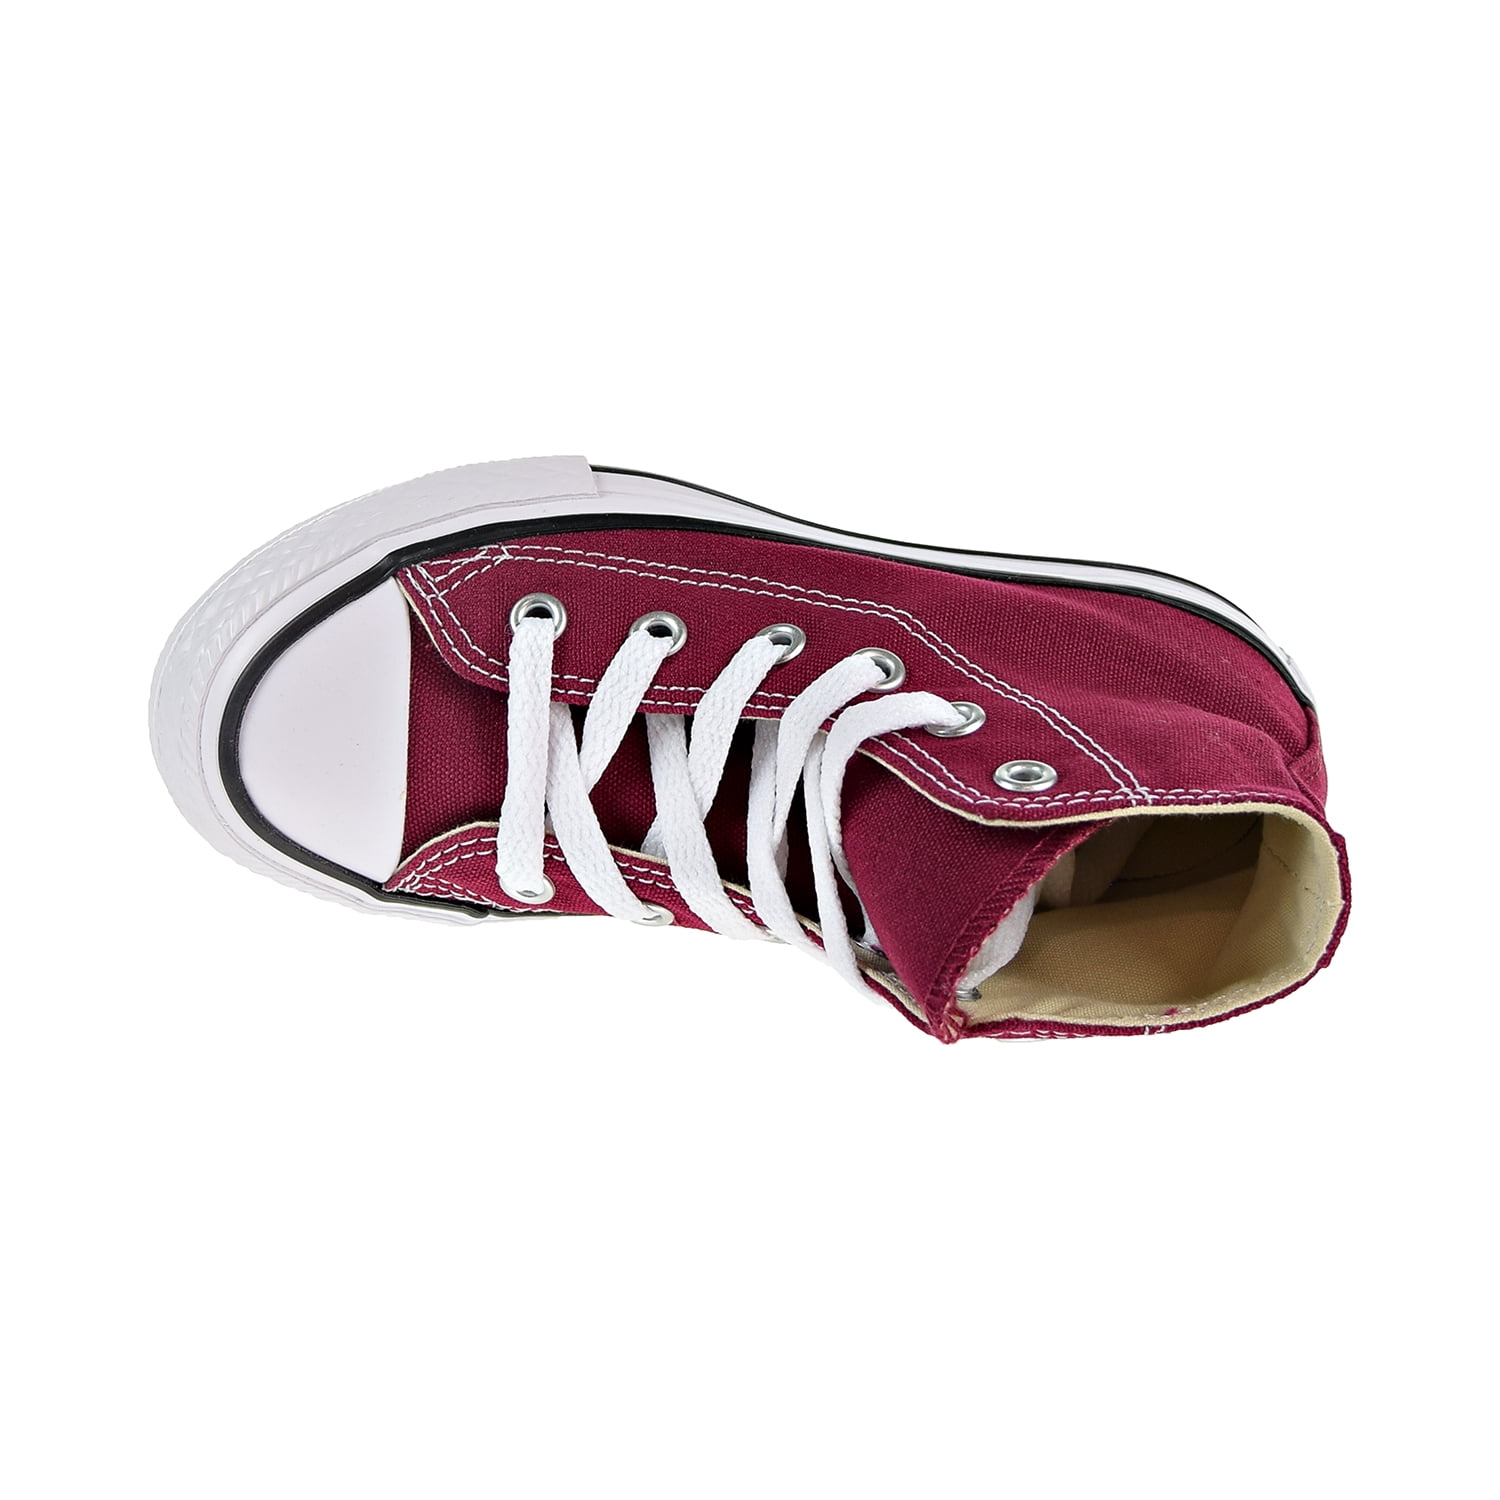 Converse Chuck Taylor All Star Hi Little Kids' Shoes Maroon 348437f -  